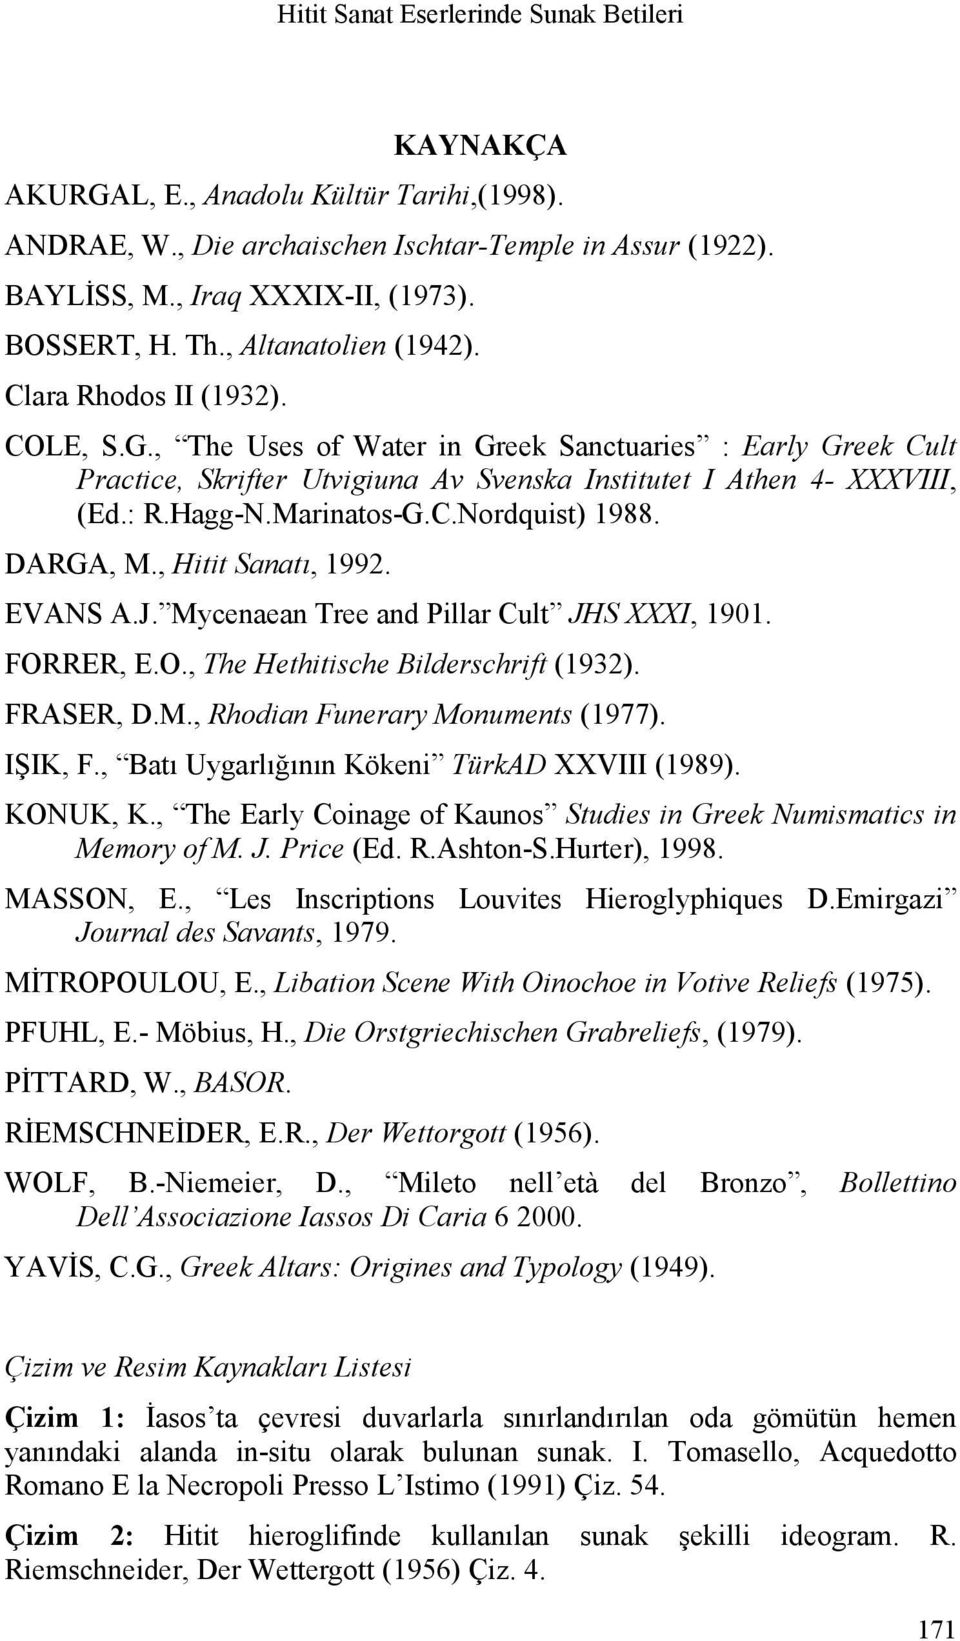 Hagg-N.Marinatos-G.C.Nordquist) 1988. DARGA, M., Hitit Sanatı, 1992. EVANS A.J. Mycenaean Tree and Pillar Cult JHS XXXI, 1901. FORRER, E.O., The Hethitische Bilderschrift (1932). FRASER, D.M., Rhodian Funerary Monuments (1977).